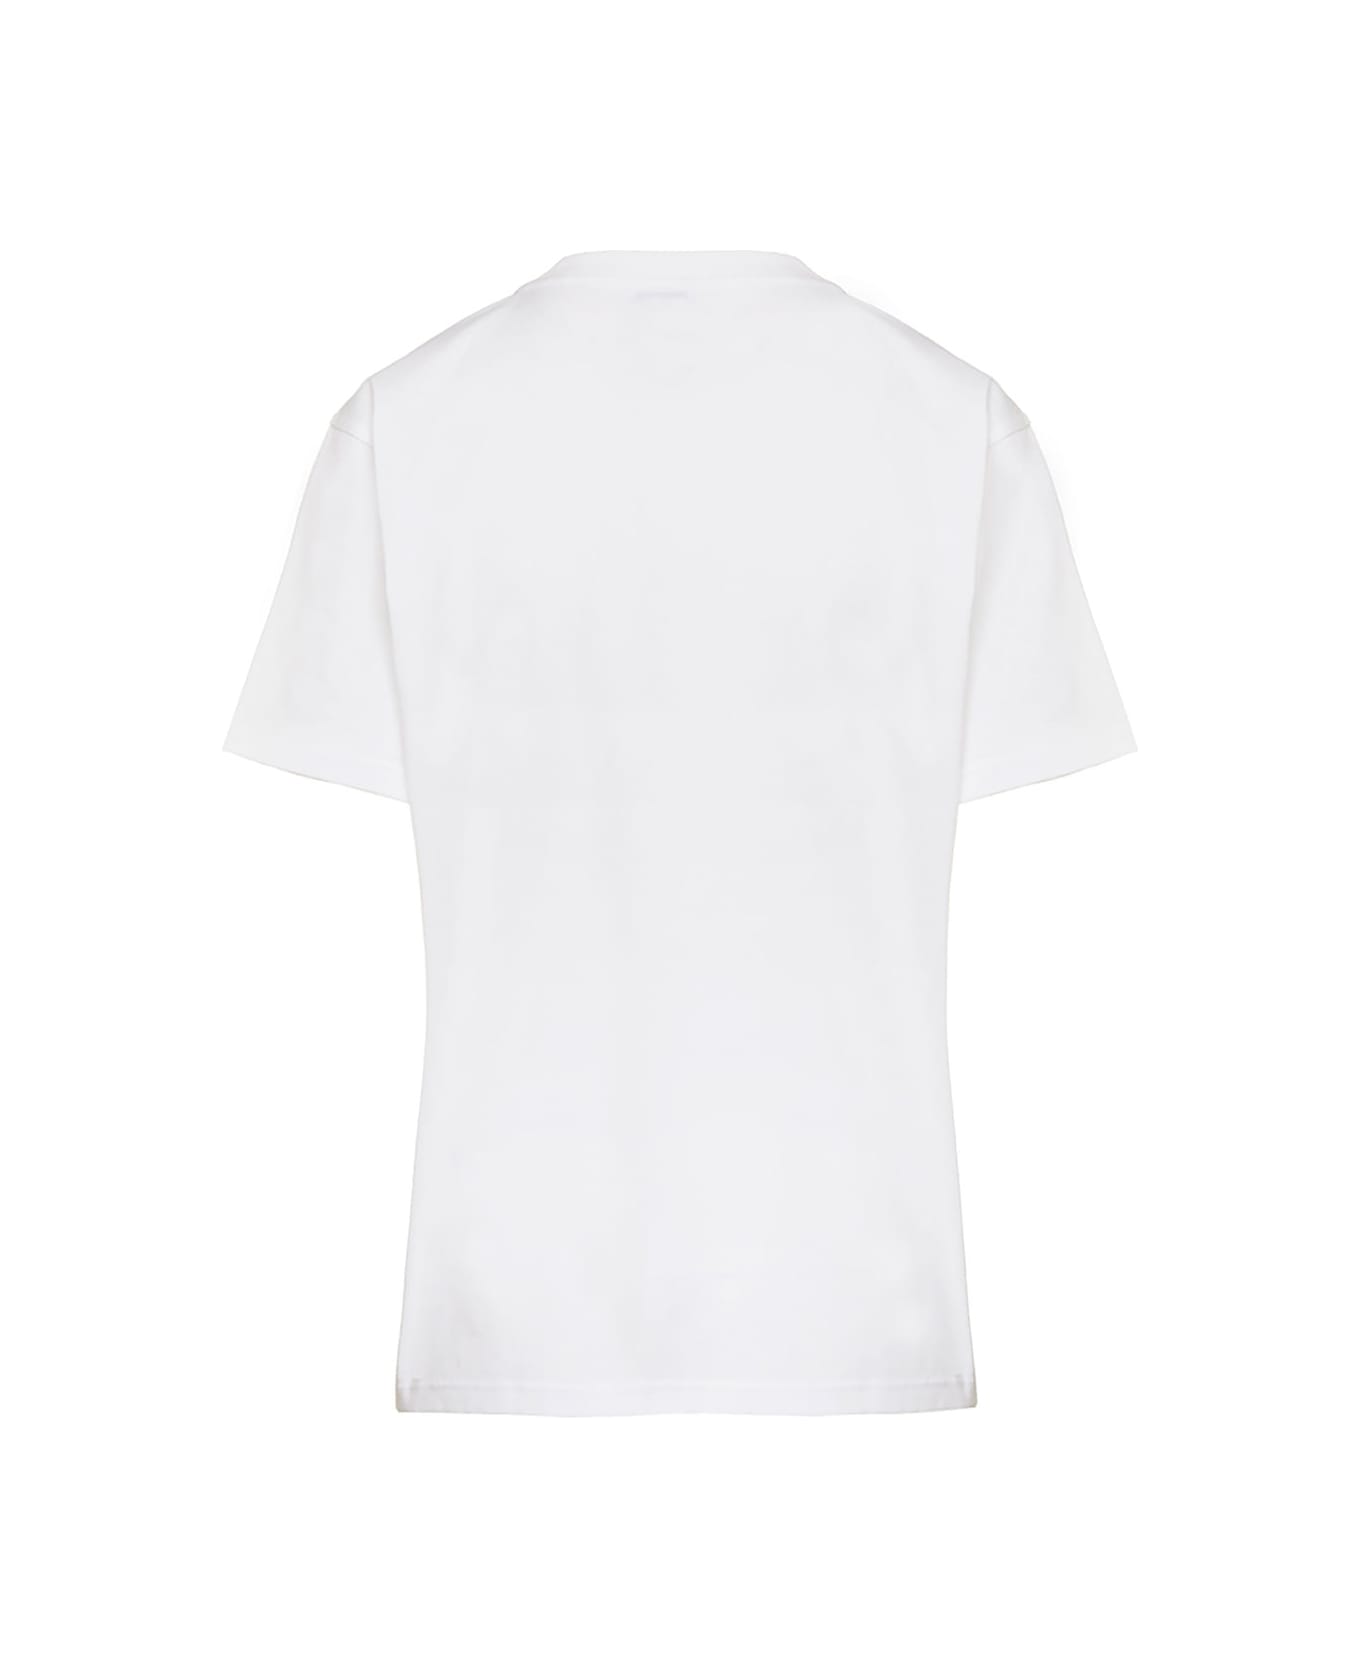 Burberry White Crewneck Logo T-shirt In Cotton Woman Burberry - White